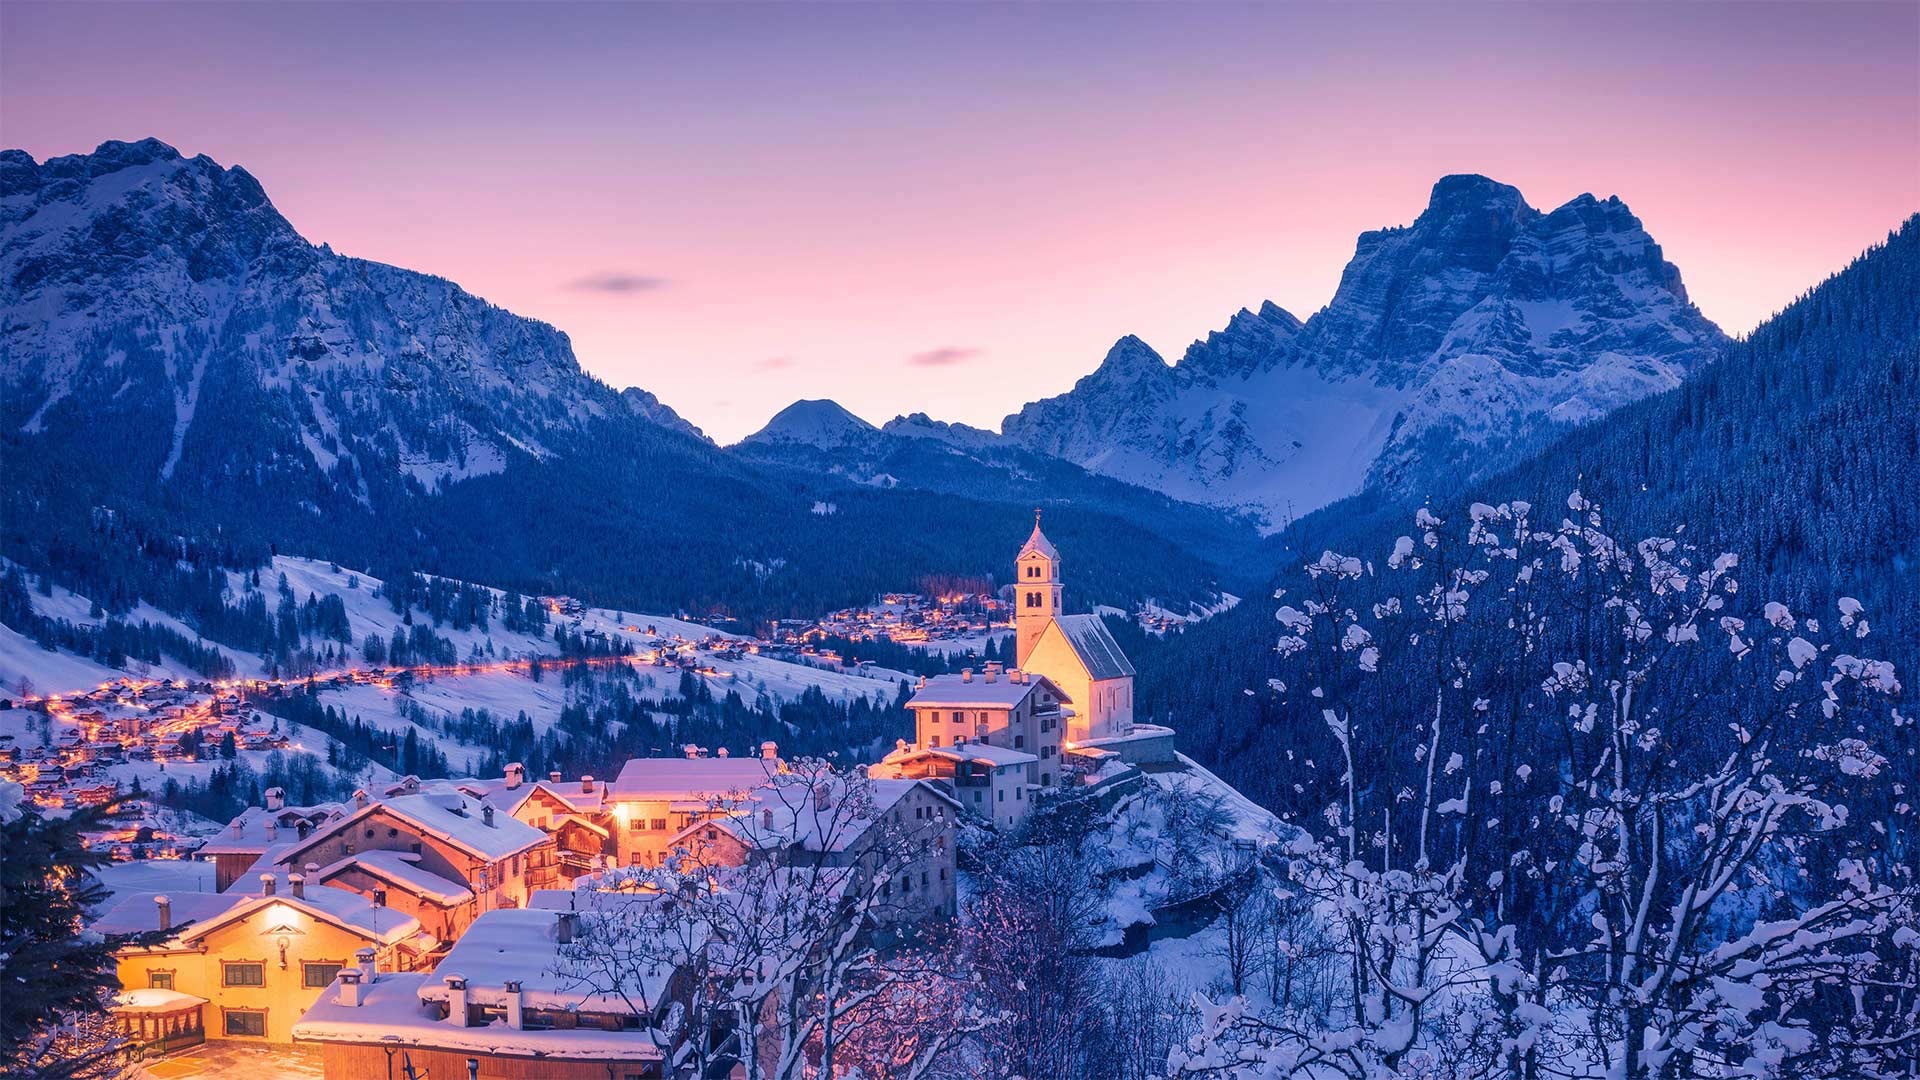 Colle Santa Lucia in the Dolomites